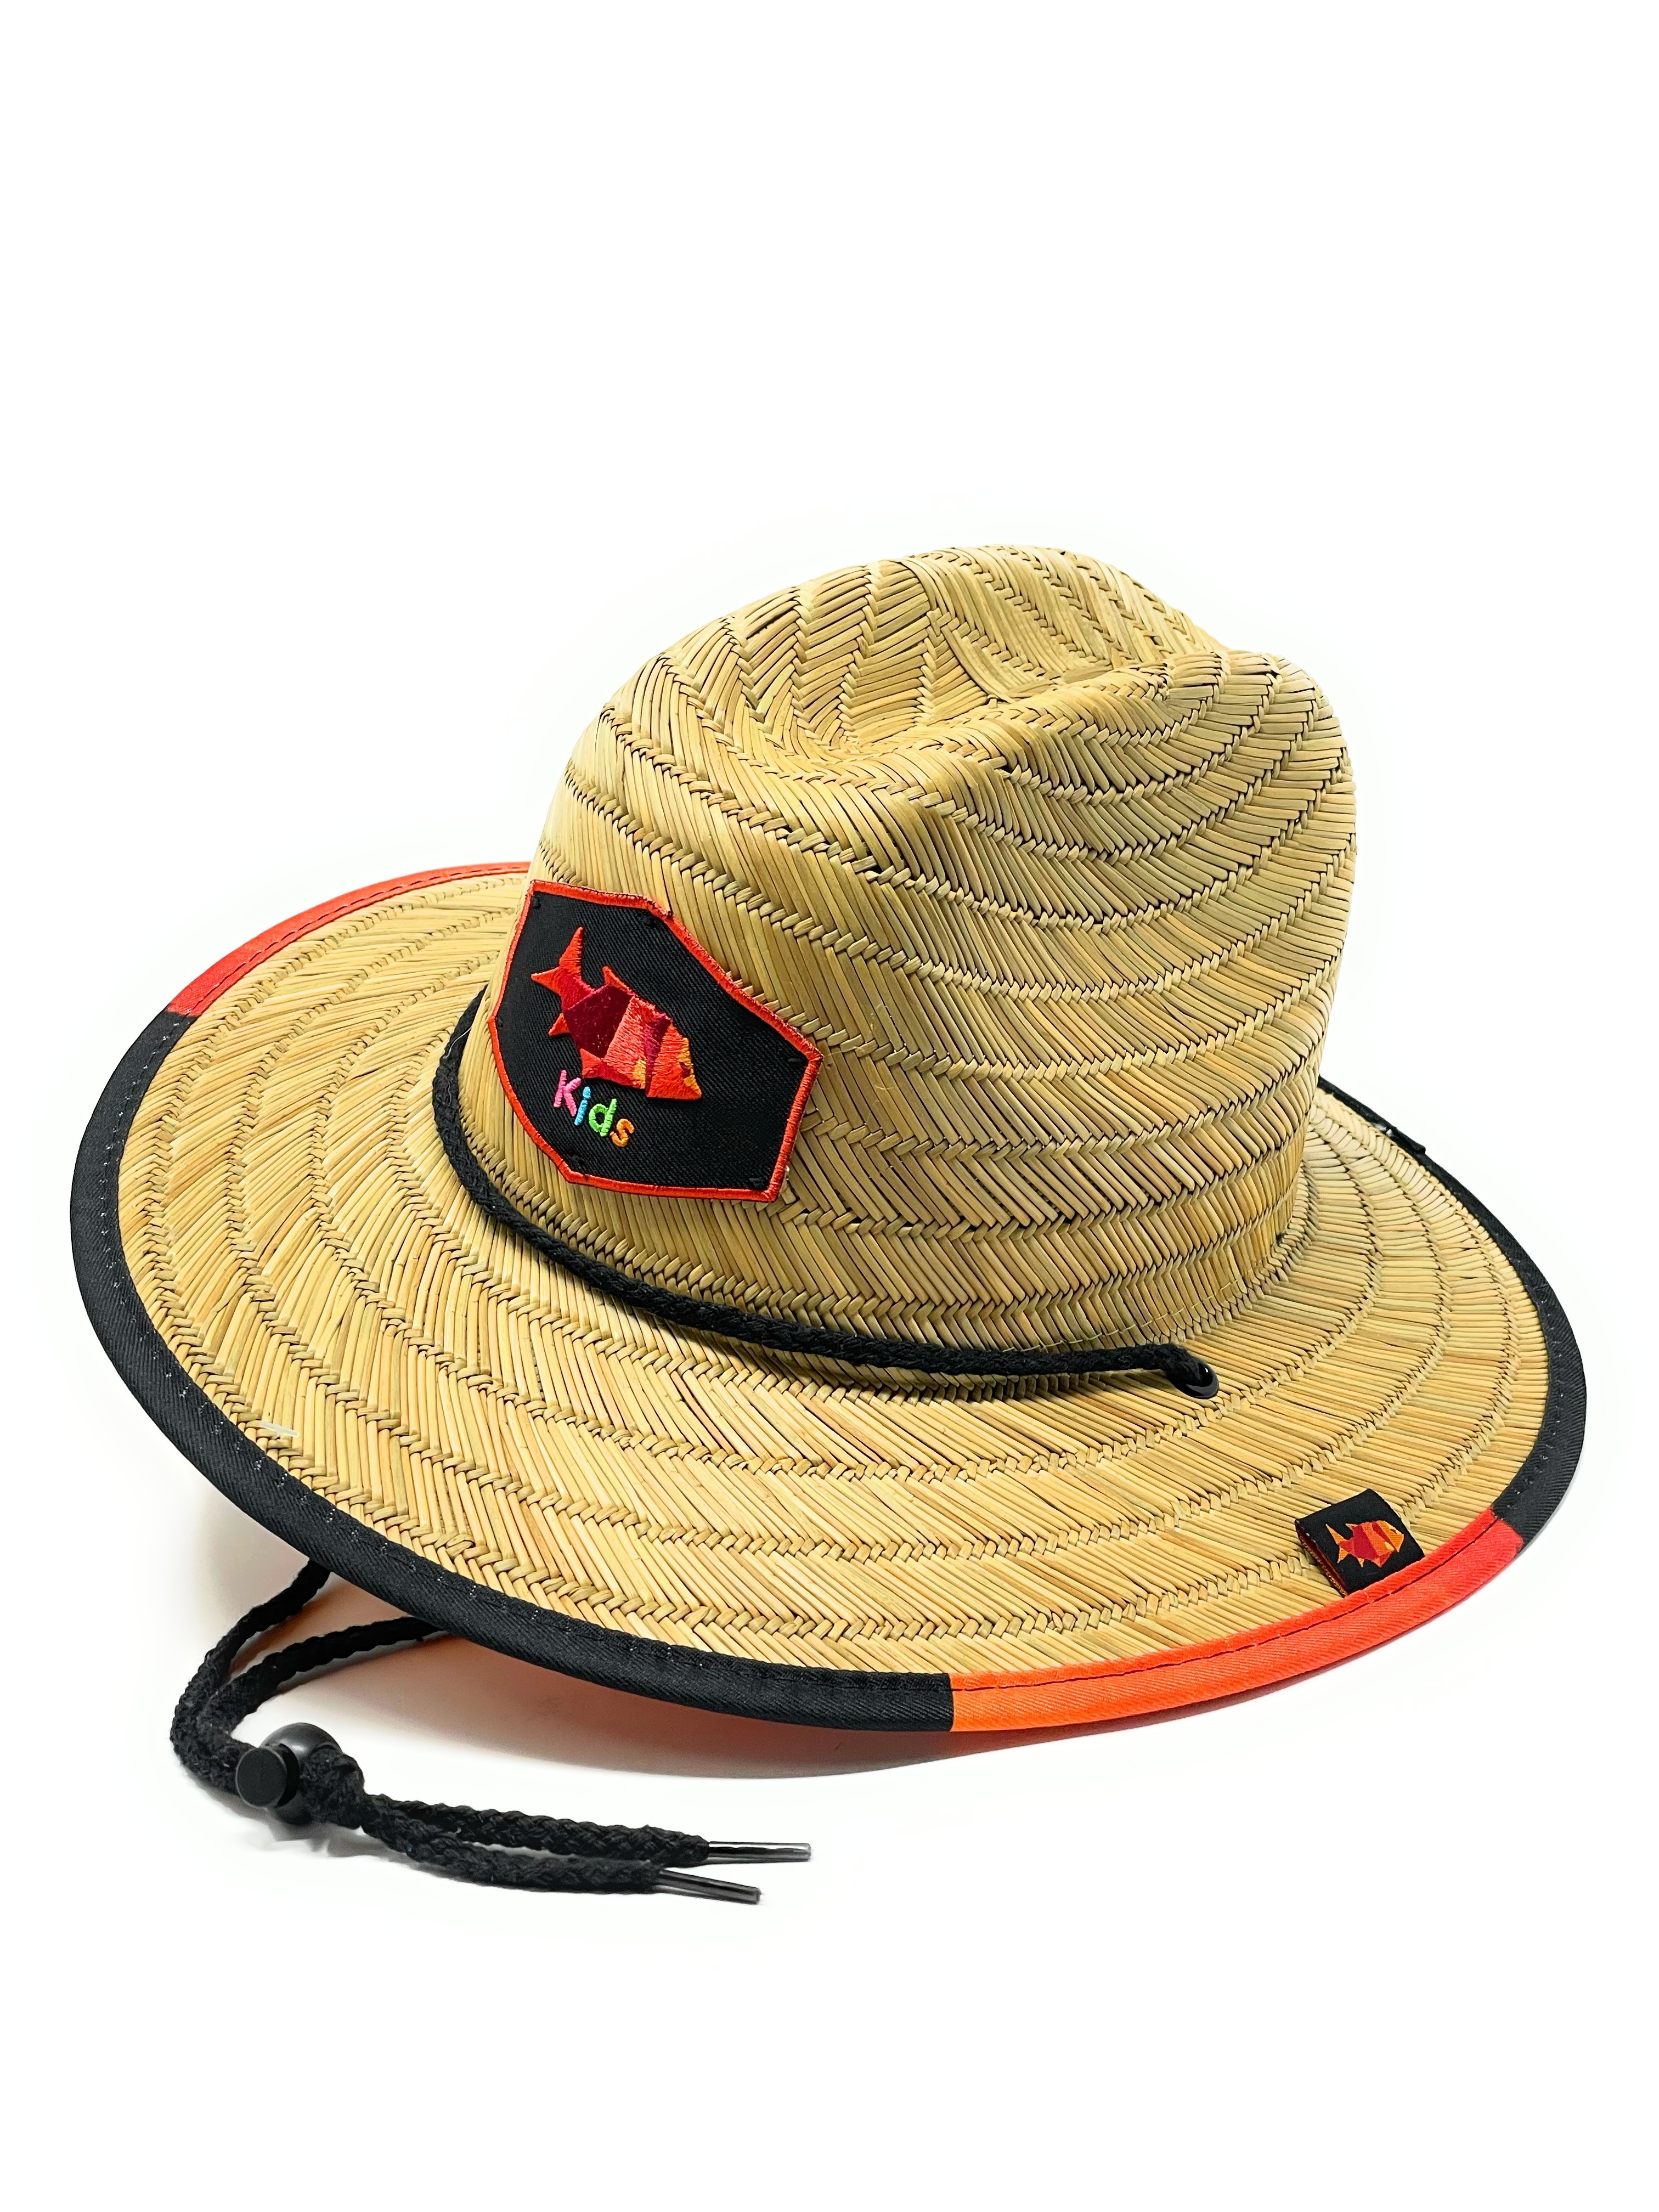 Sunrise Lifeguard for Kids Straw Hat. Kids beach Sun hat.